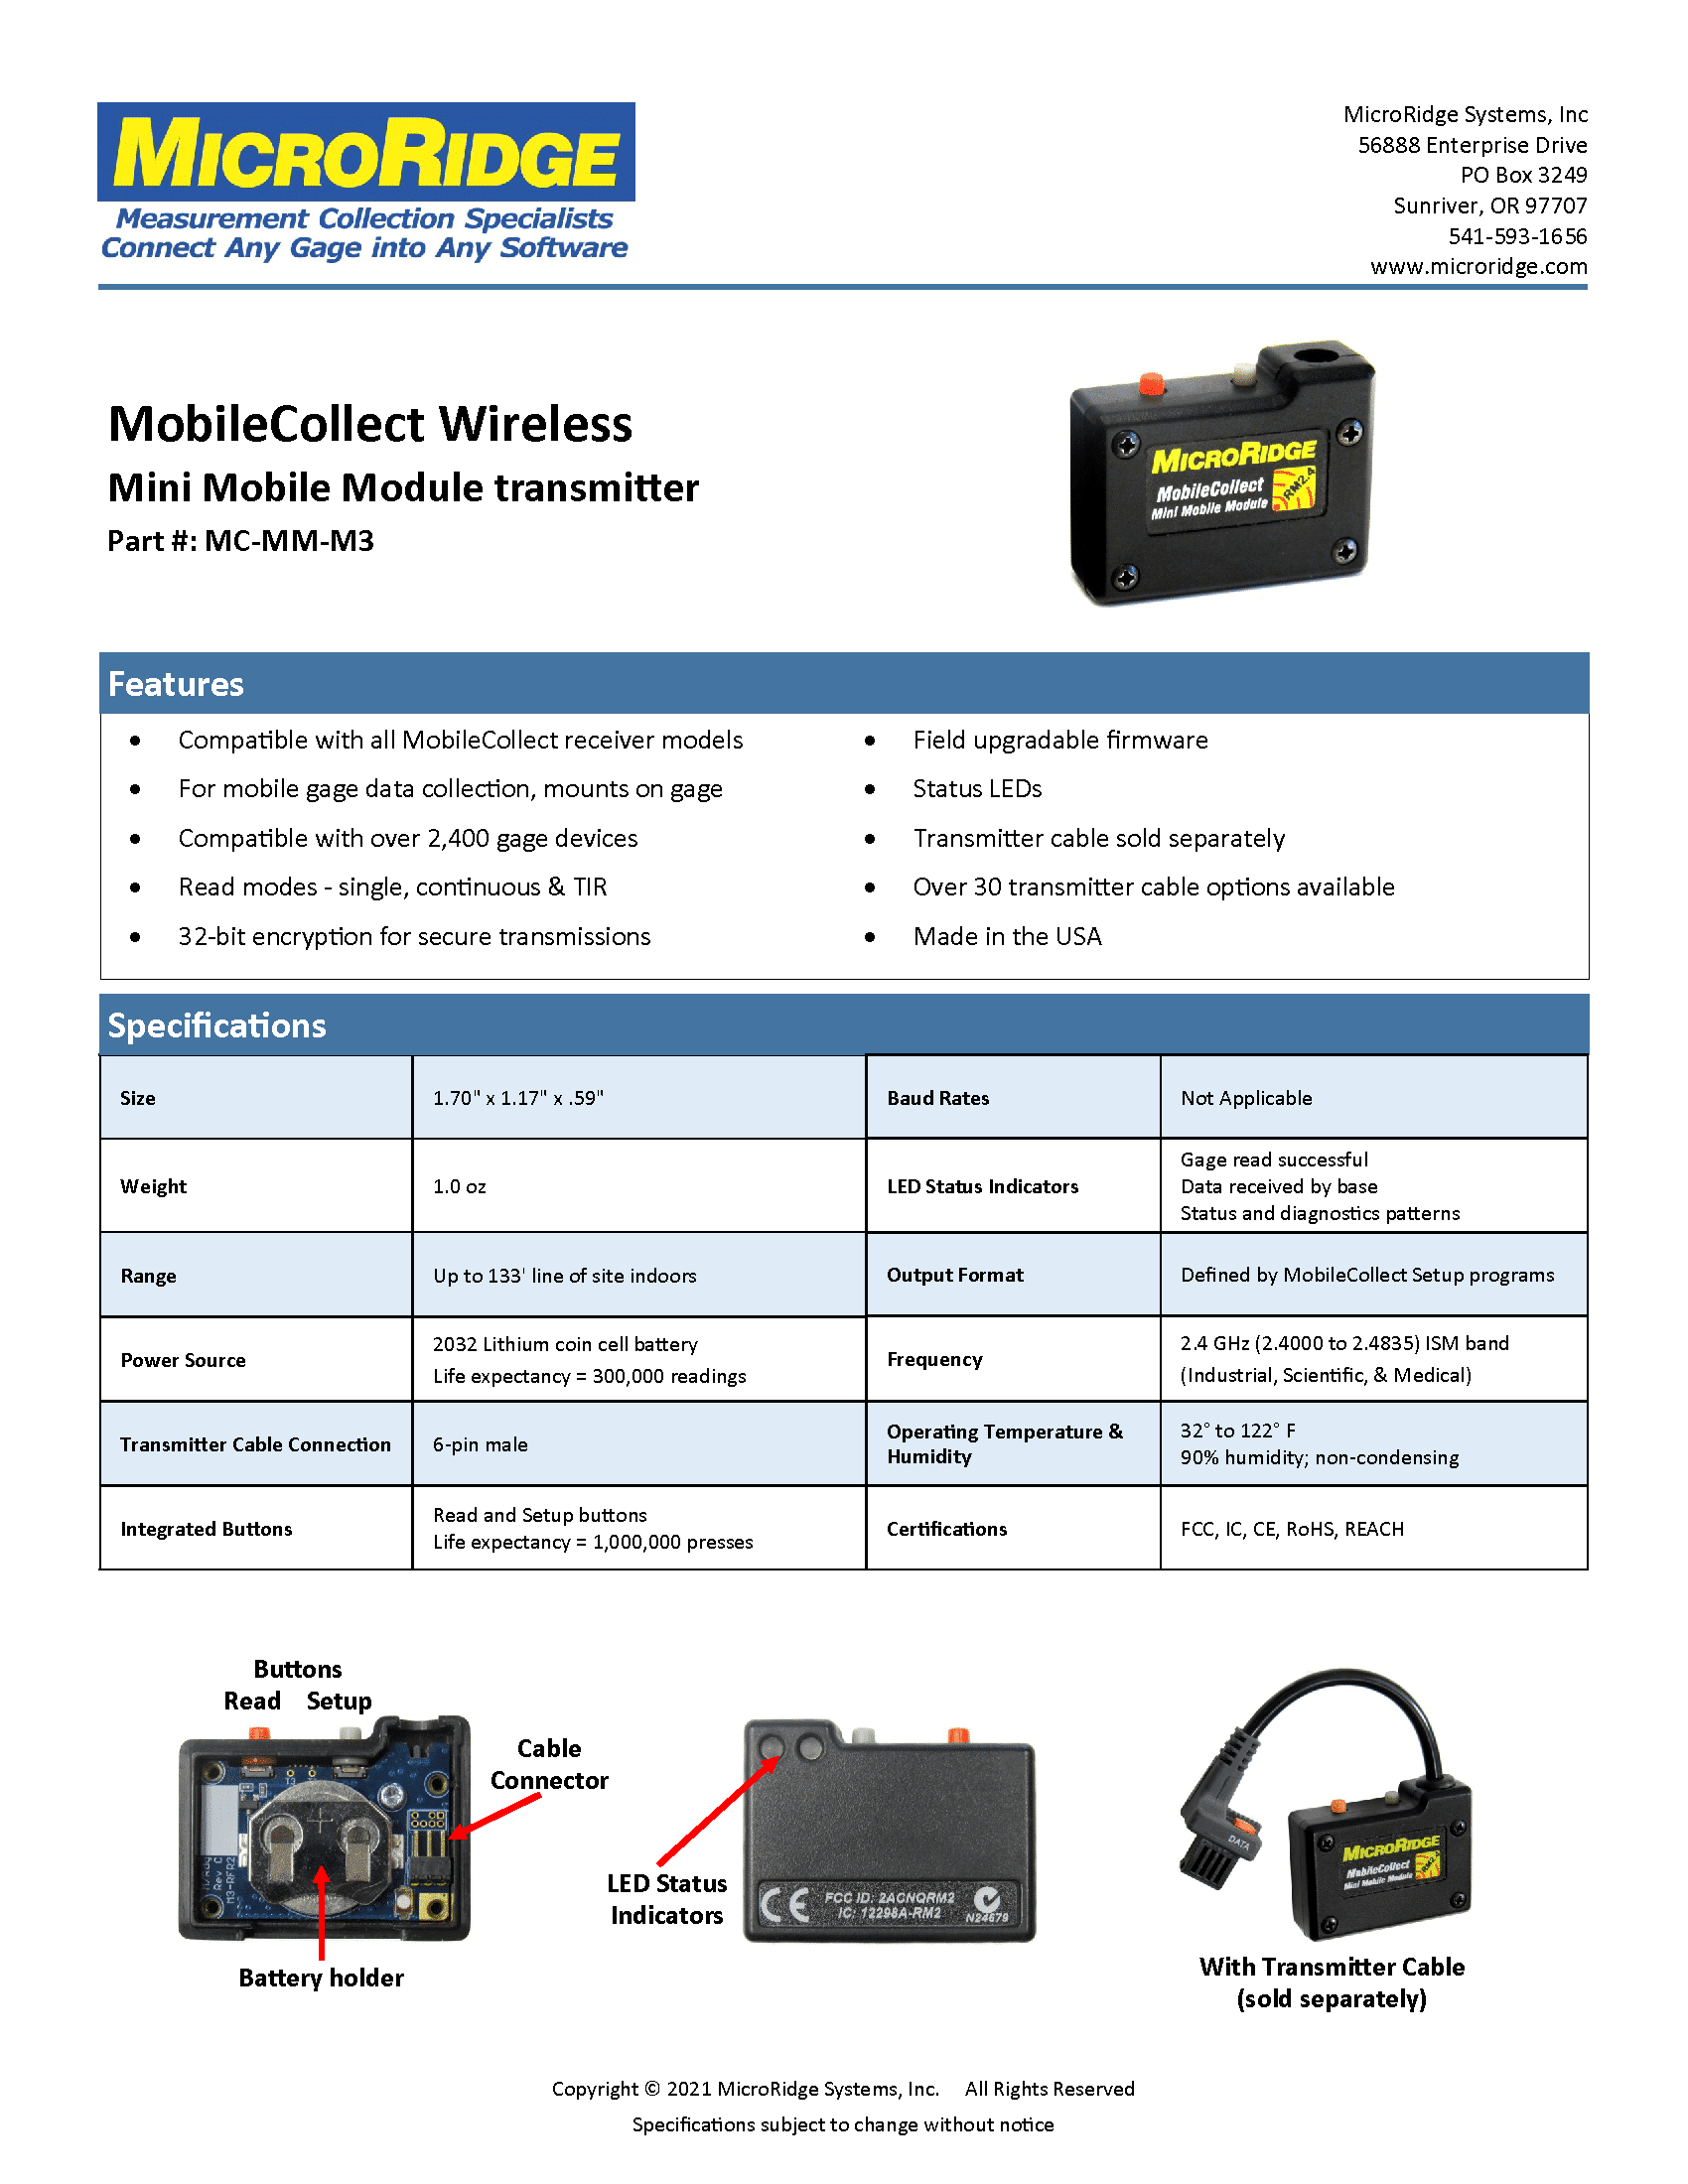 Mini Mobile Module Spec Sheet